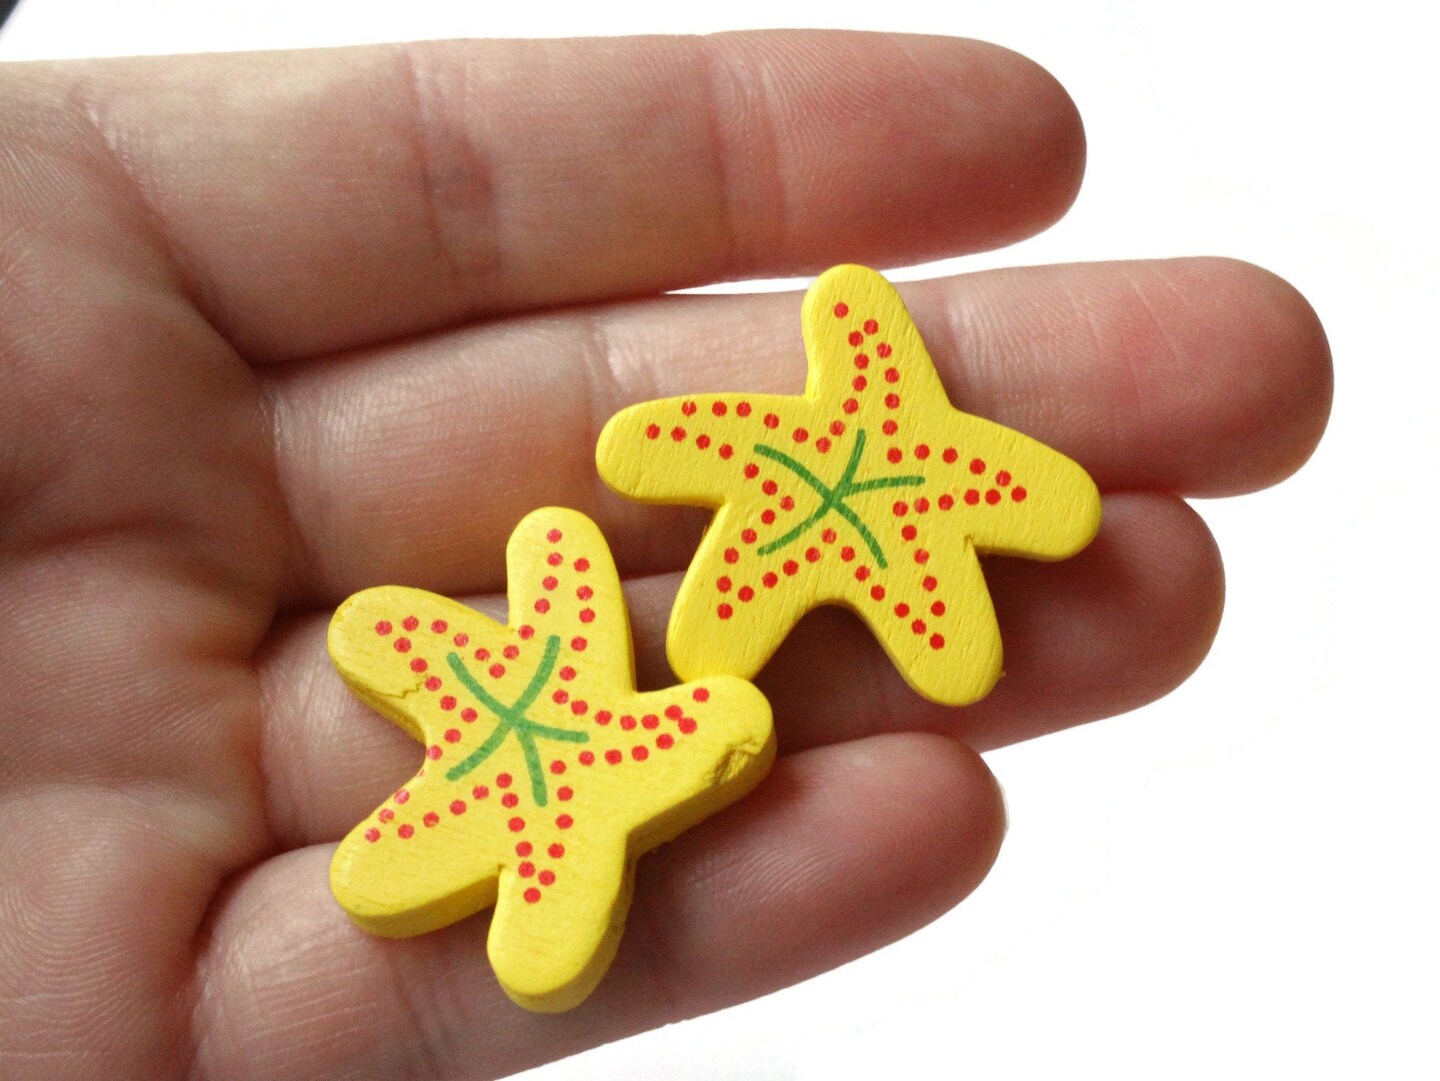 15 28mm Yellow Wood Starfish Beads Loose Wooden Star Beads